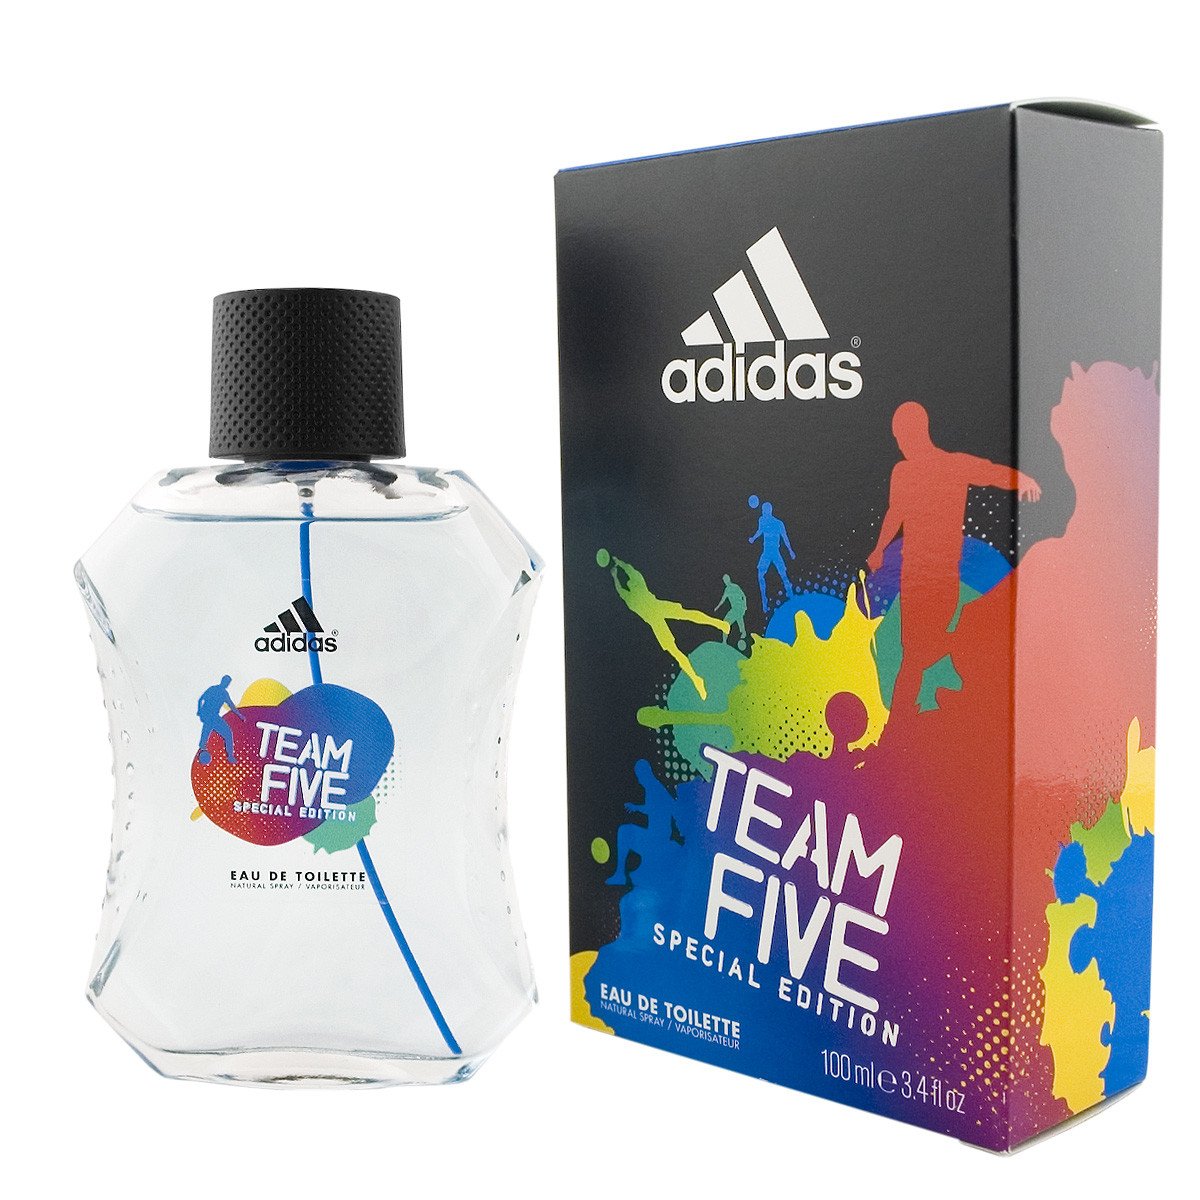 Planet Perfume - Adidas Team Five Special Edition : Super Deals